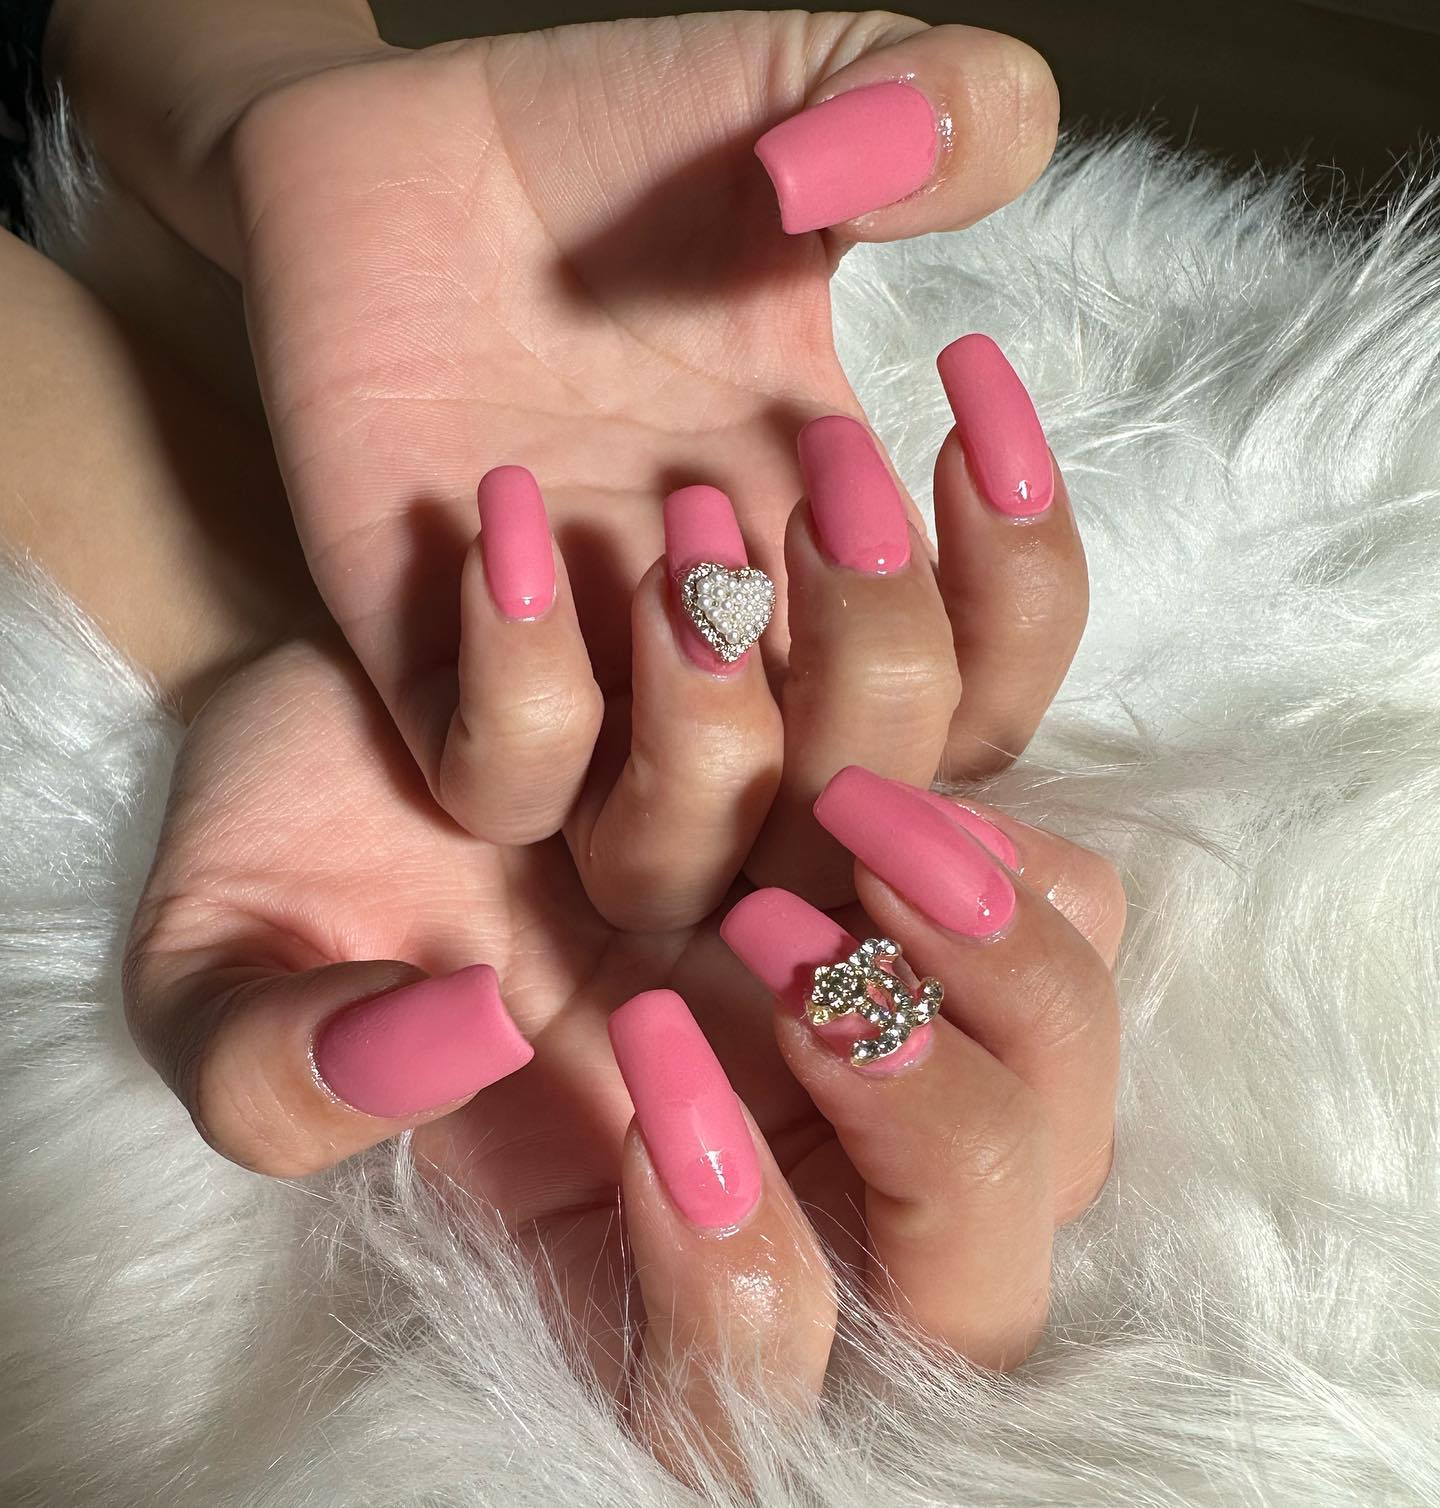 Chanel nails